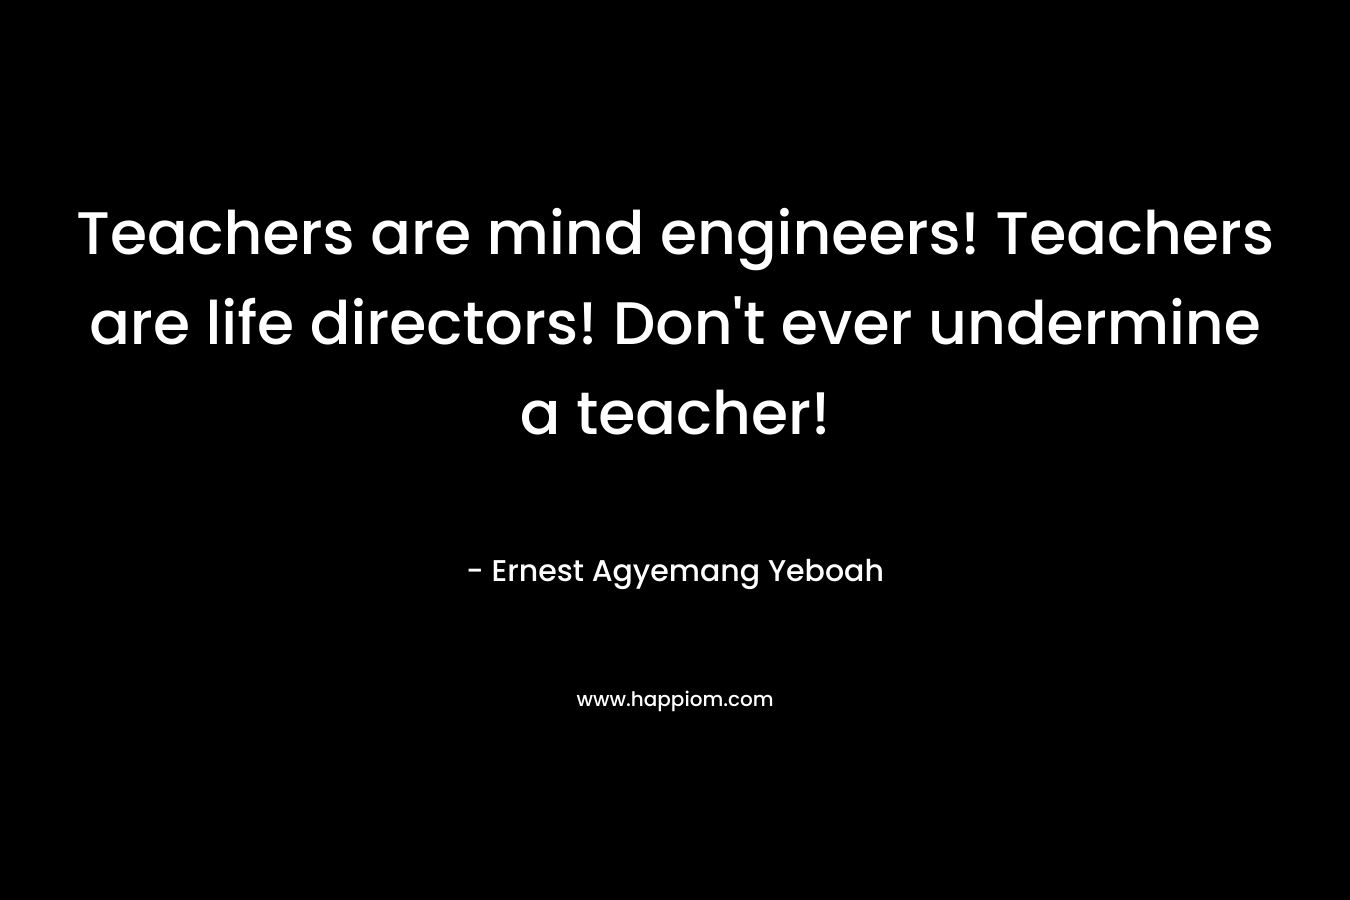 Teachers are mind engineers! Teachers are life directors! Don't ever undermine a teacher!